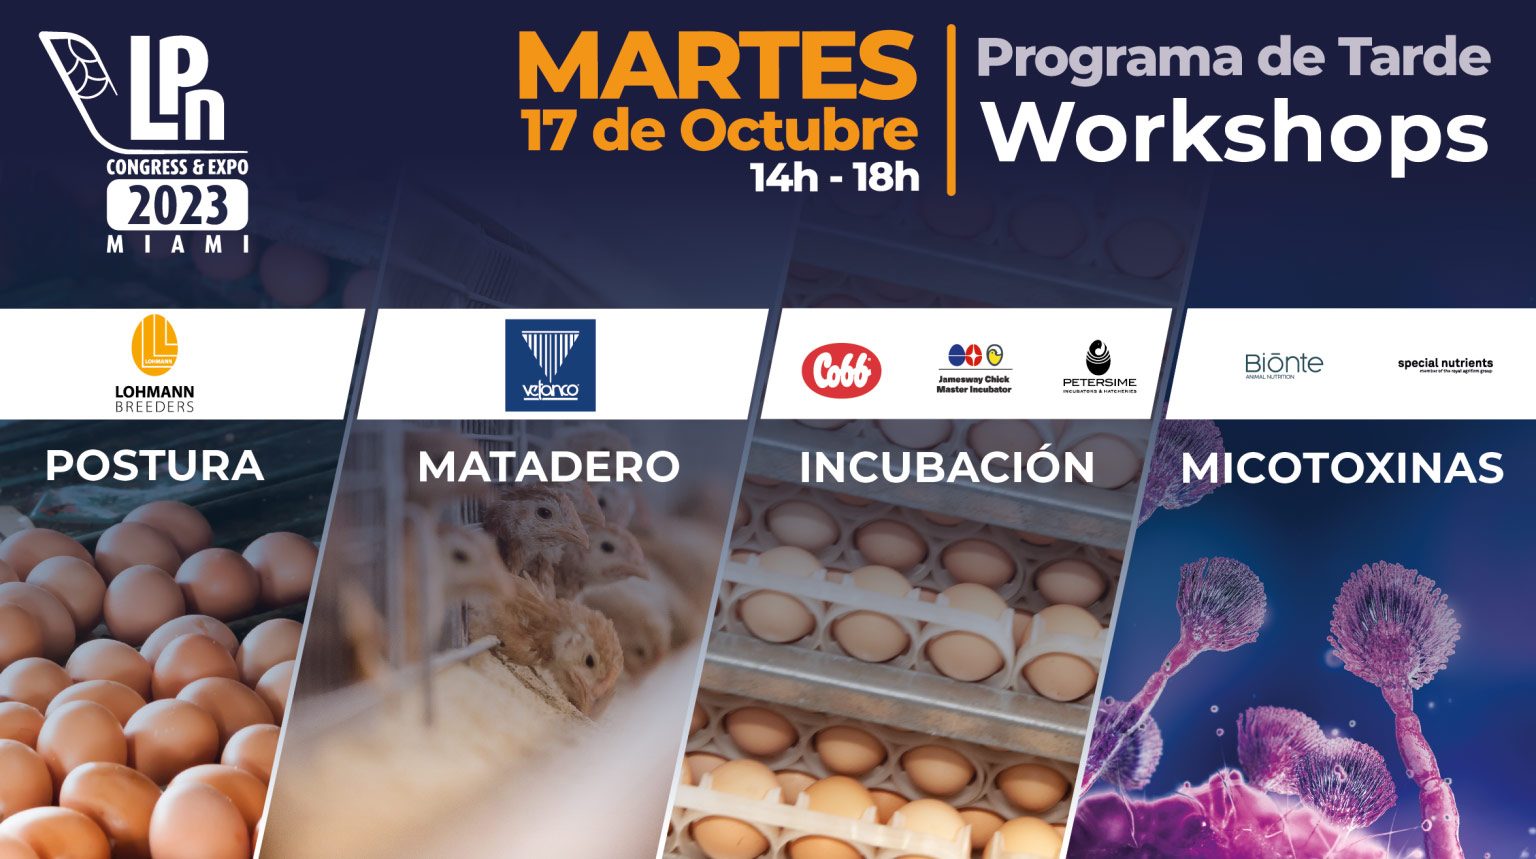 workshop-postura-matadero-incubacion-avicultura-micotoxinas-lpn-congress